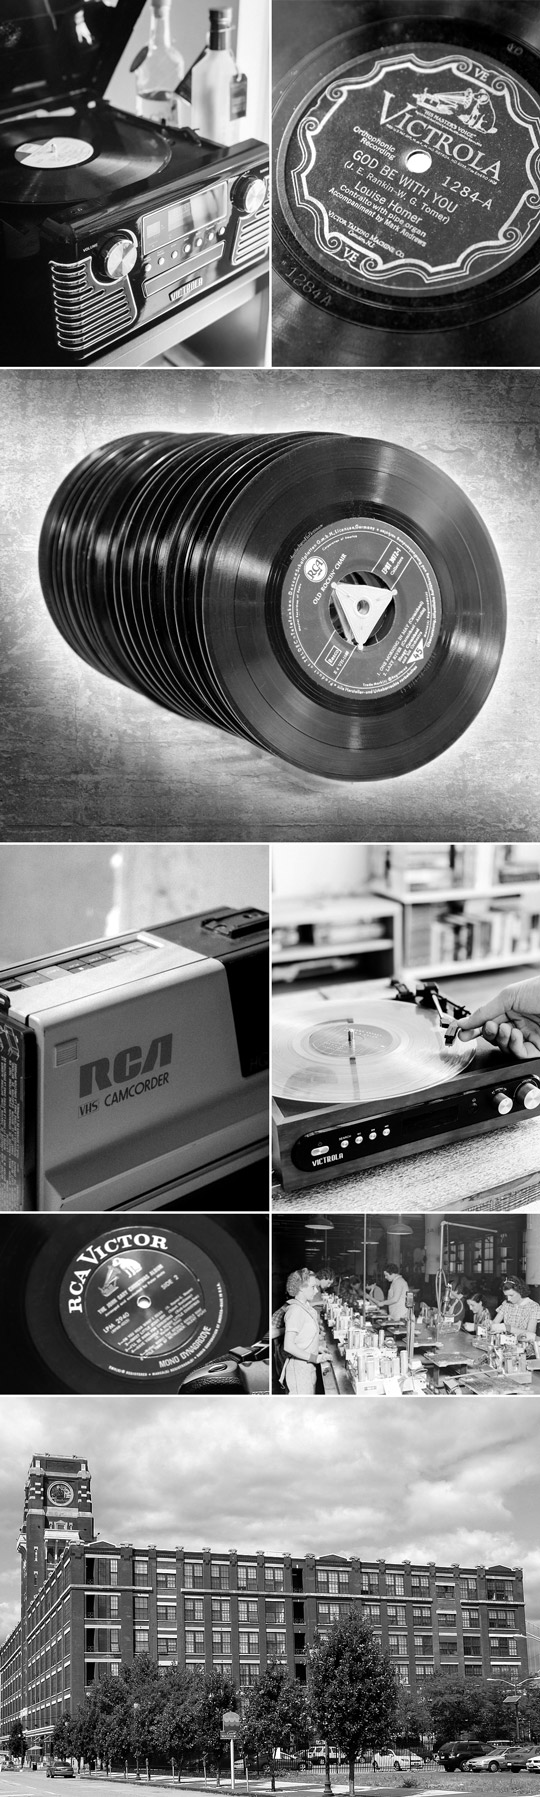 RCA-Victor